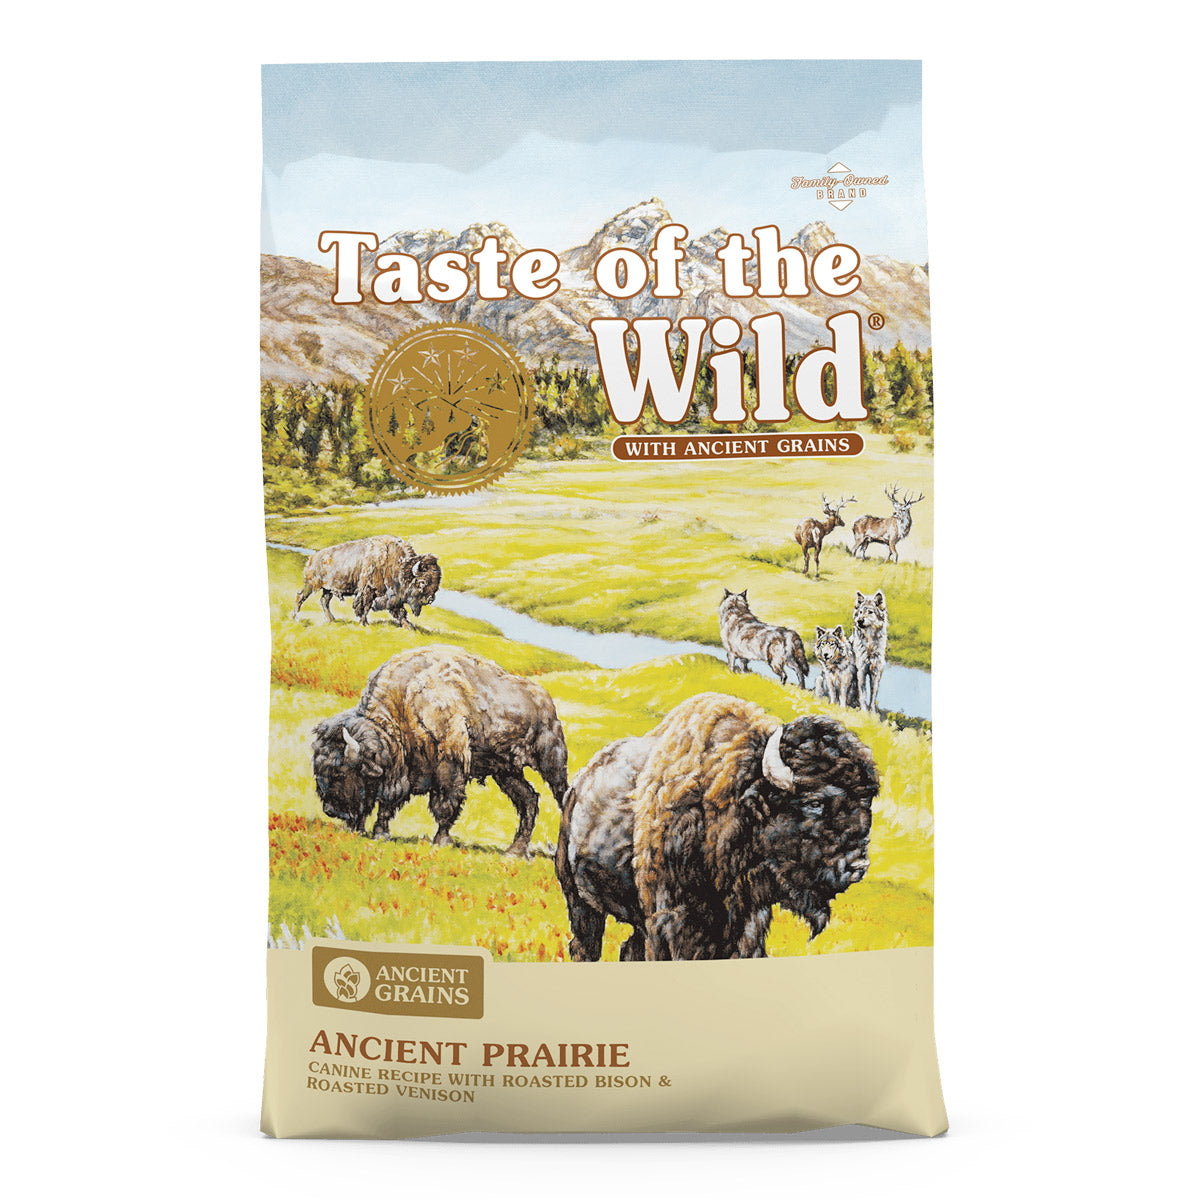 Taste Of The Wild - Ancient Prairie Canine Recipe